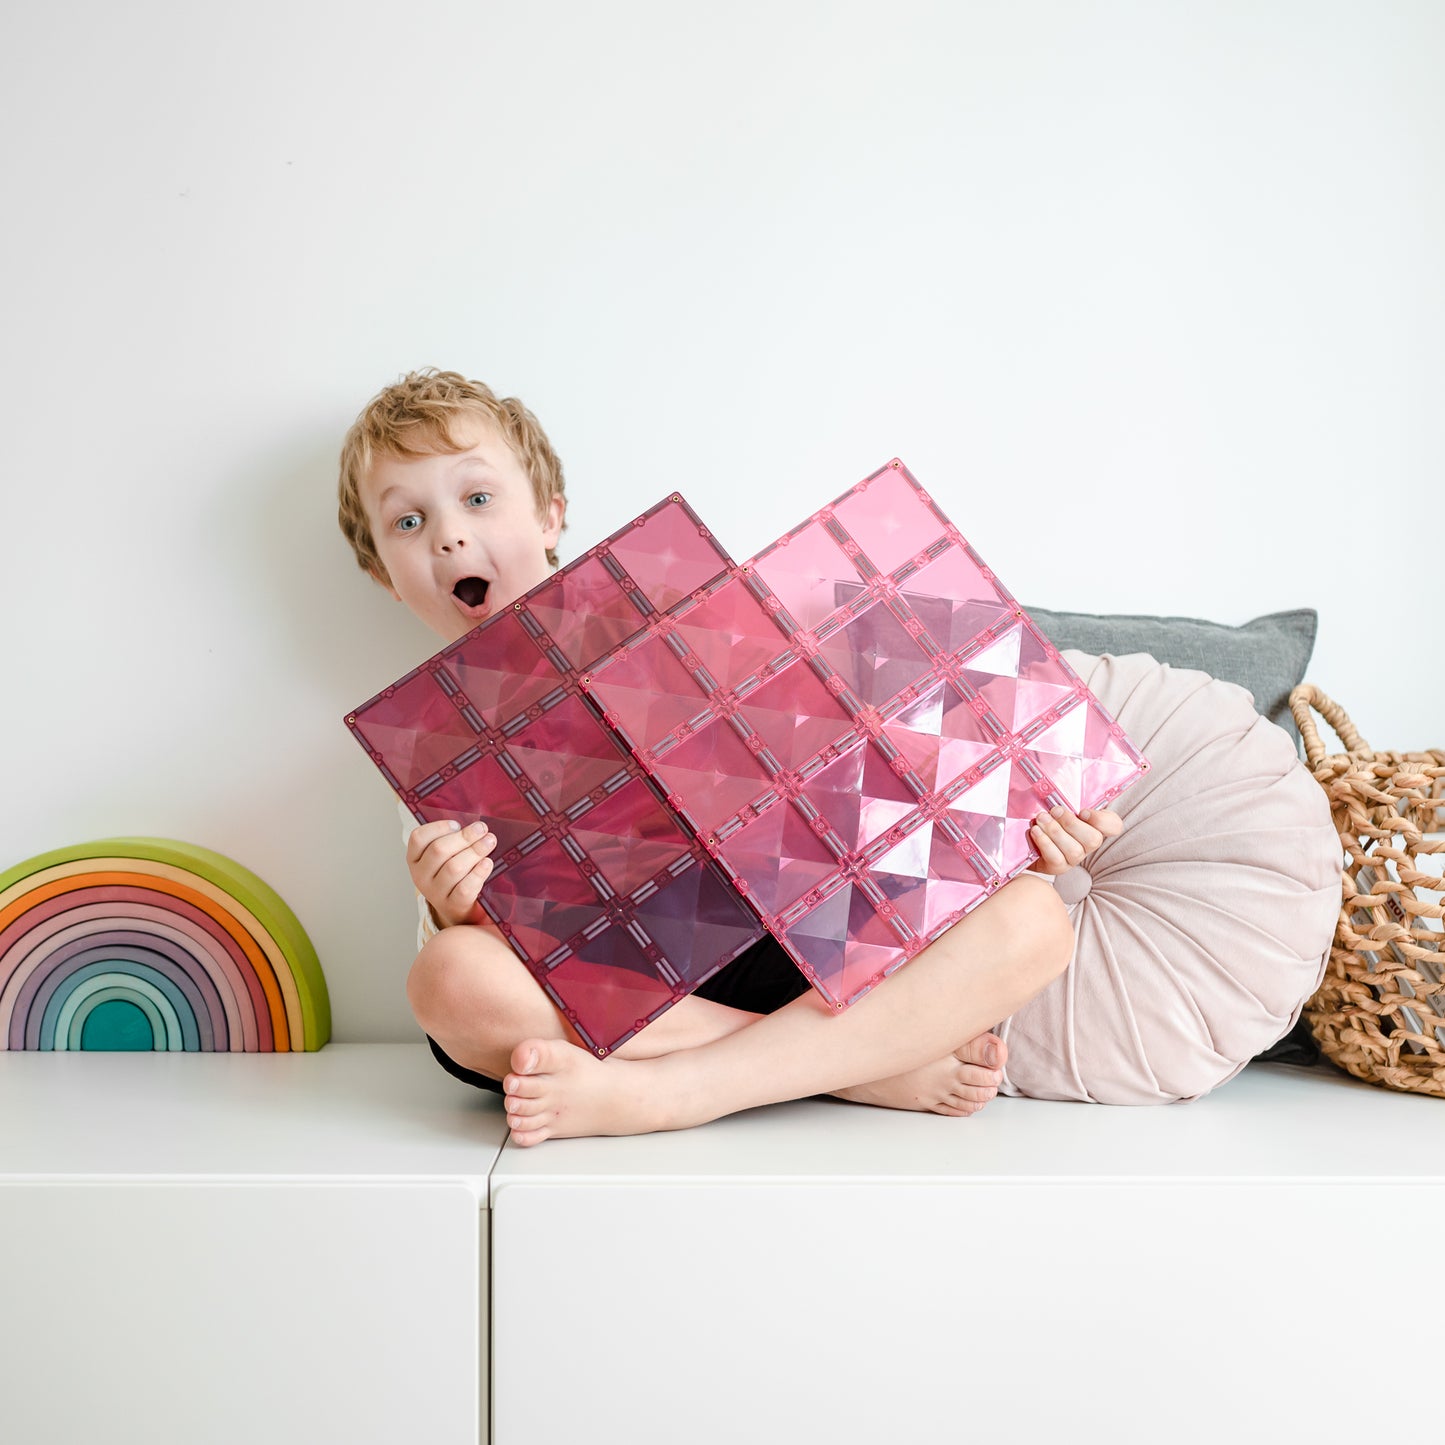 Connetix Tiles 2 Piece Base Plate Pink & Berry Pack